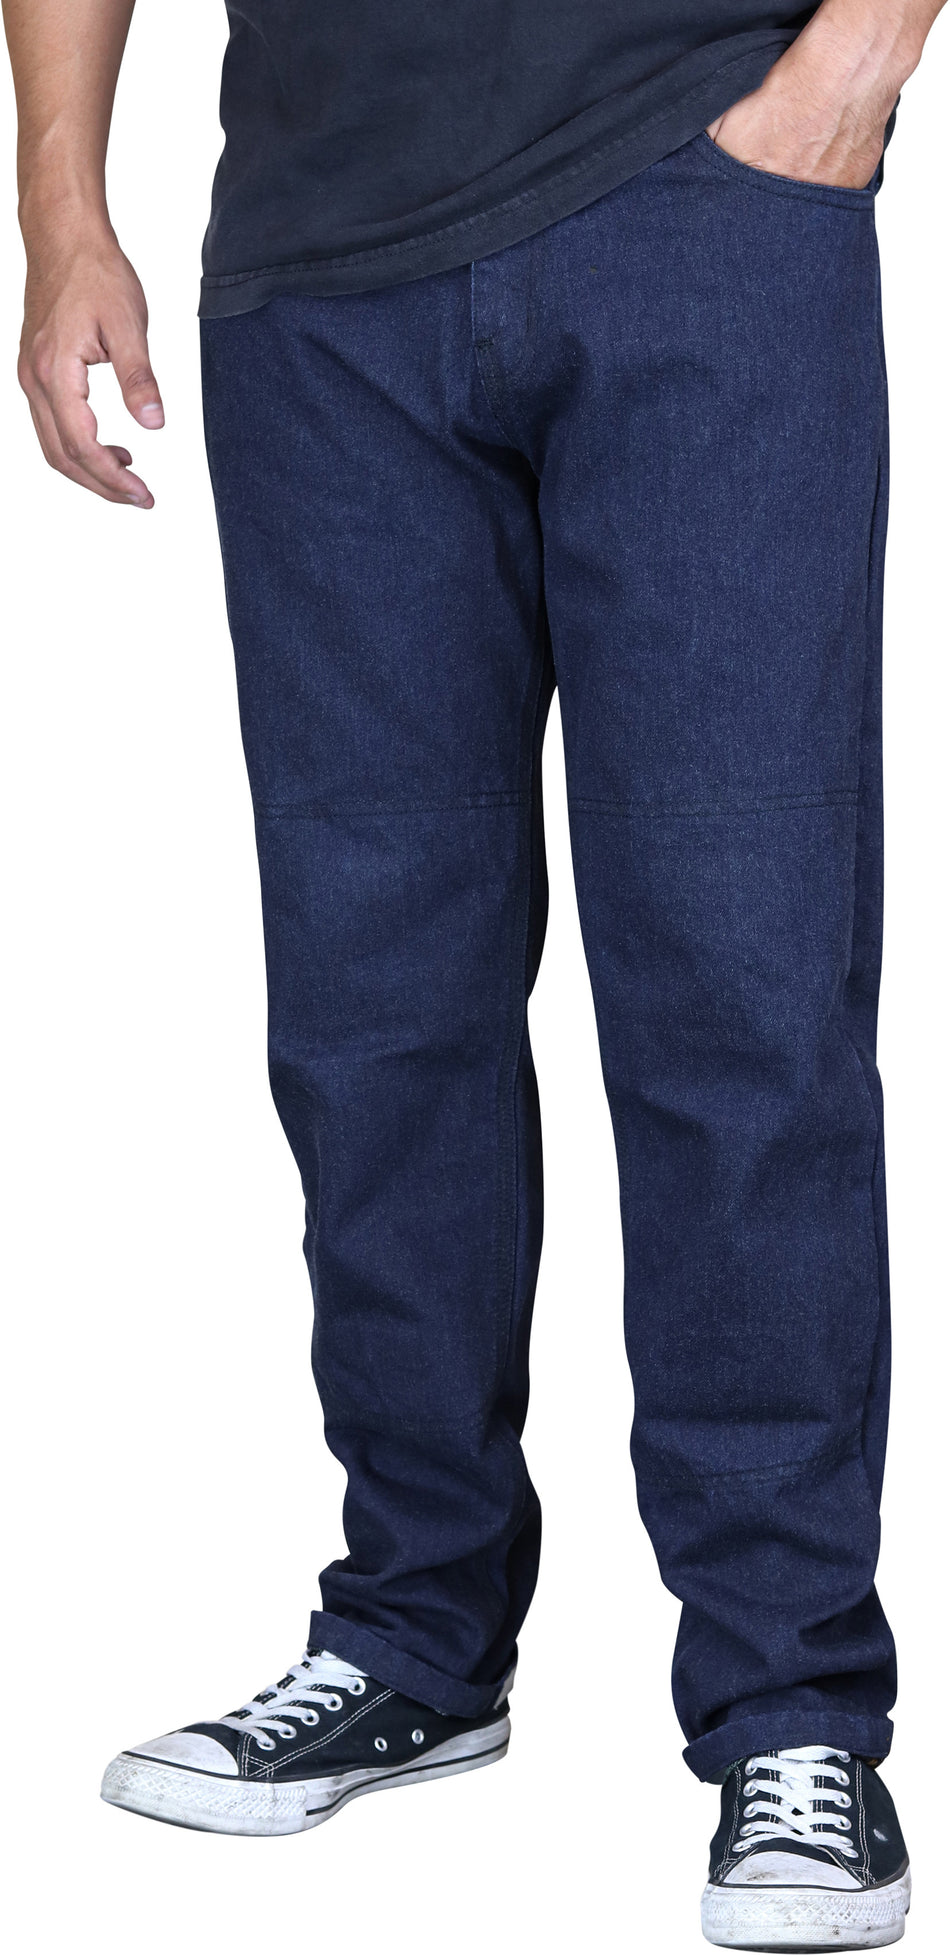 SCORPION EXO Covert Ultra Jeans Blue Size 42 4402-42